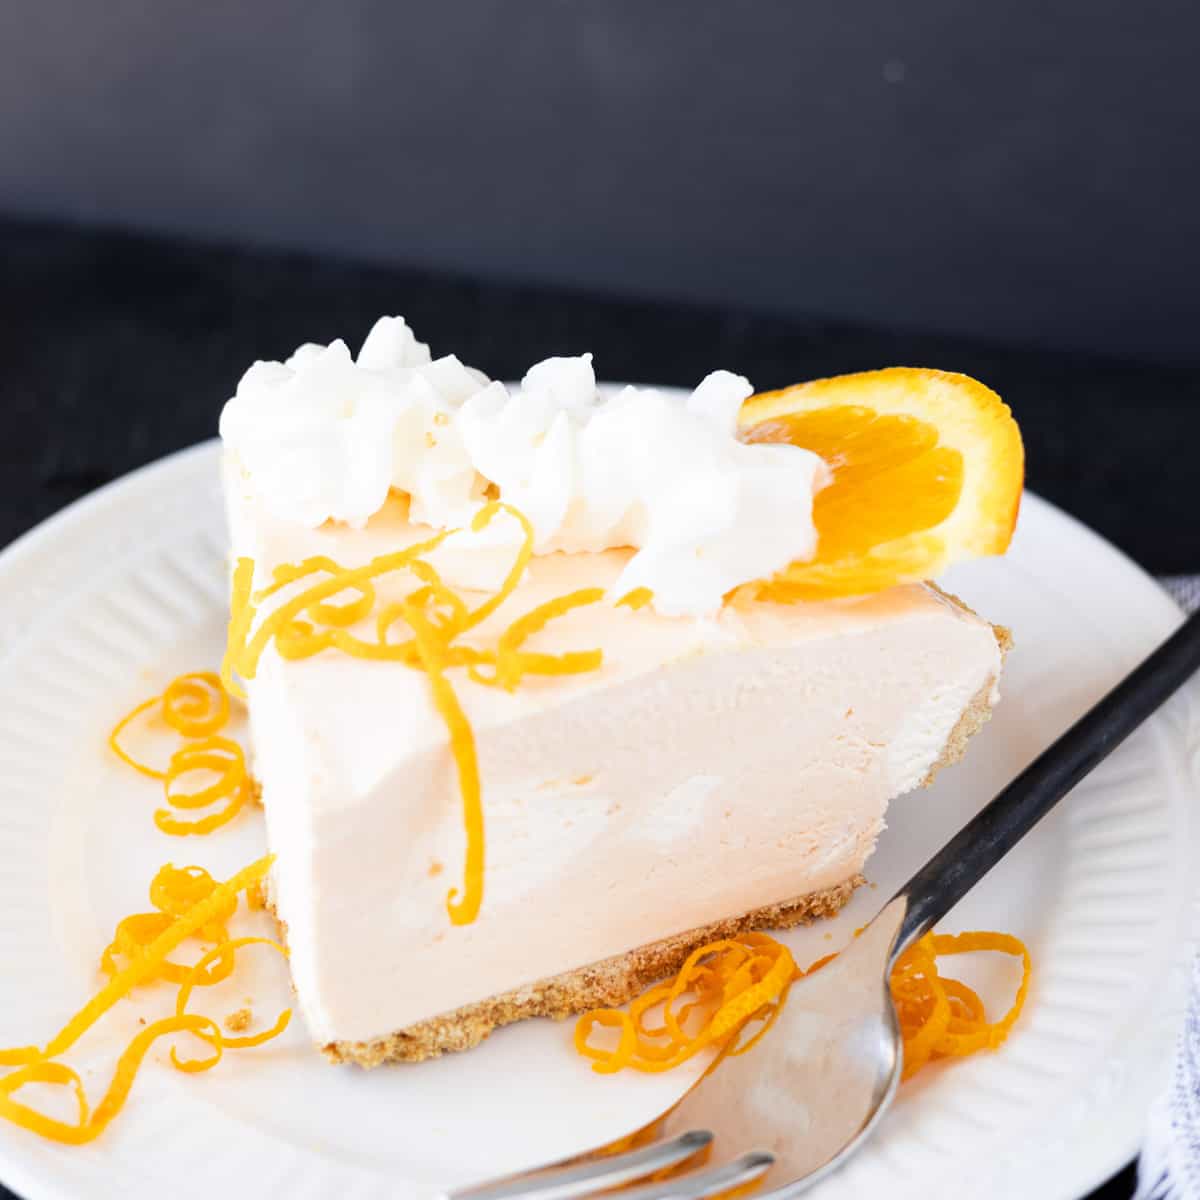 A slice of orange cheesecake garnished with orange peel and whipped cream.